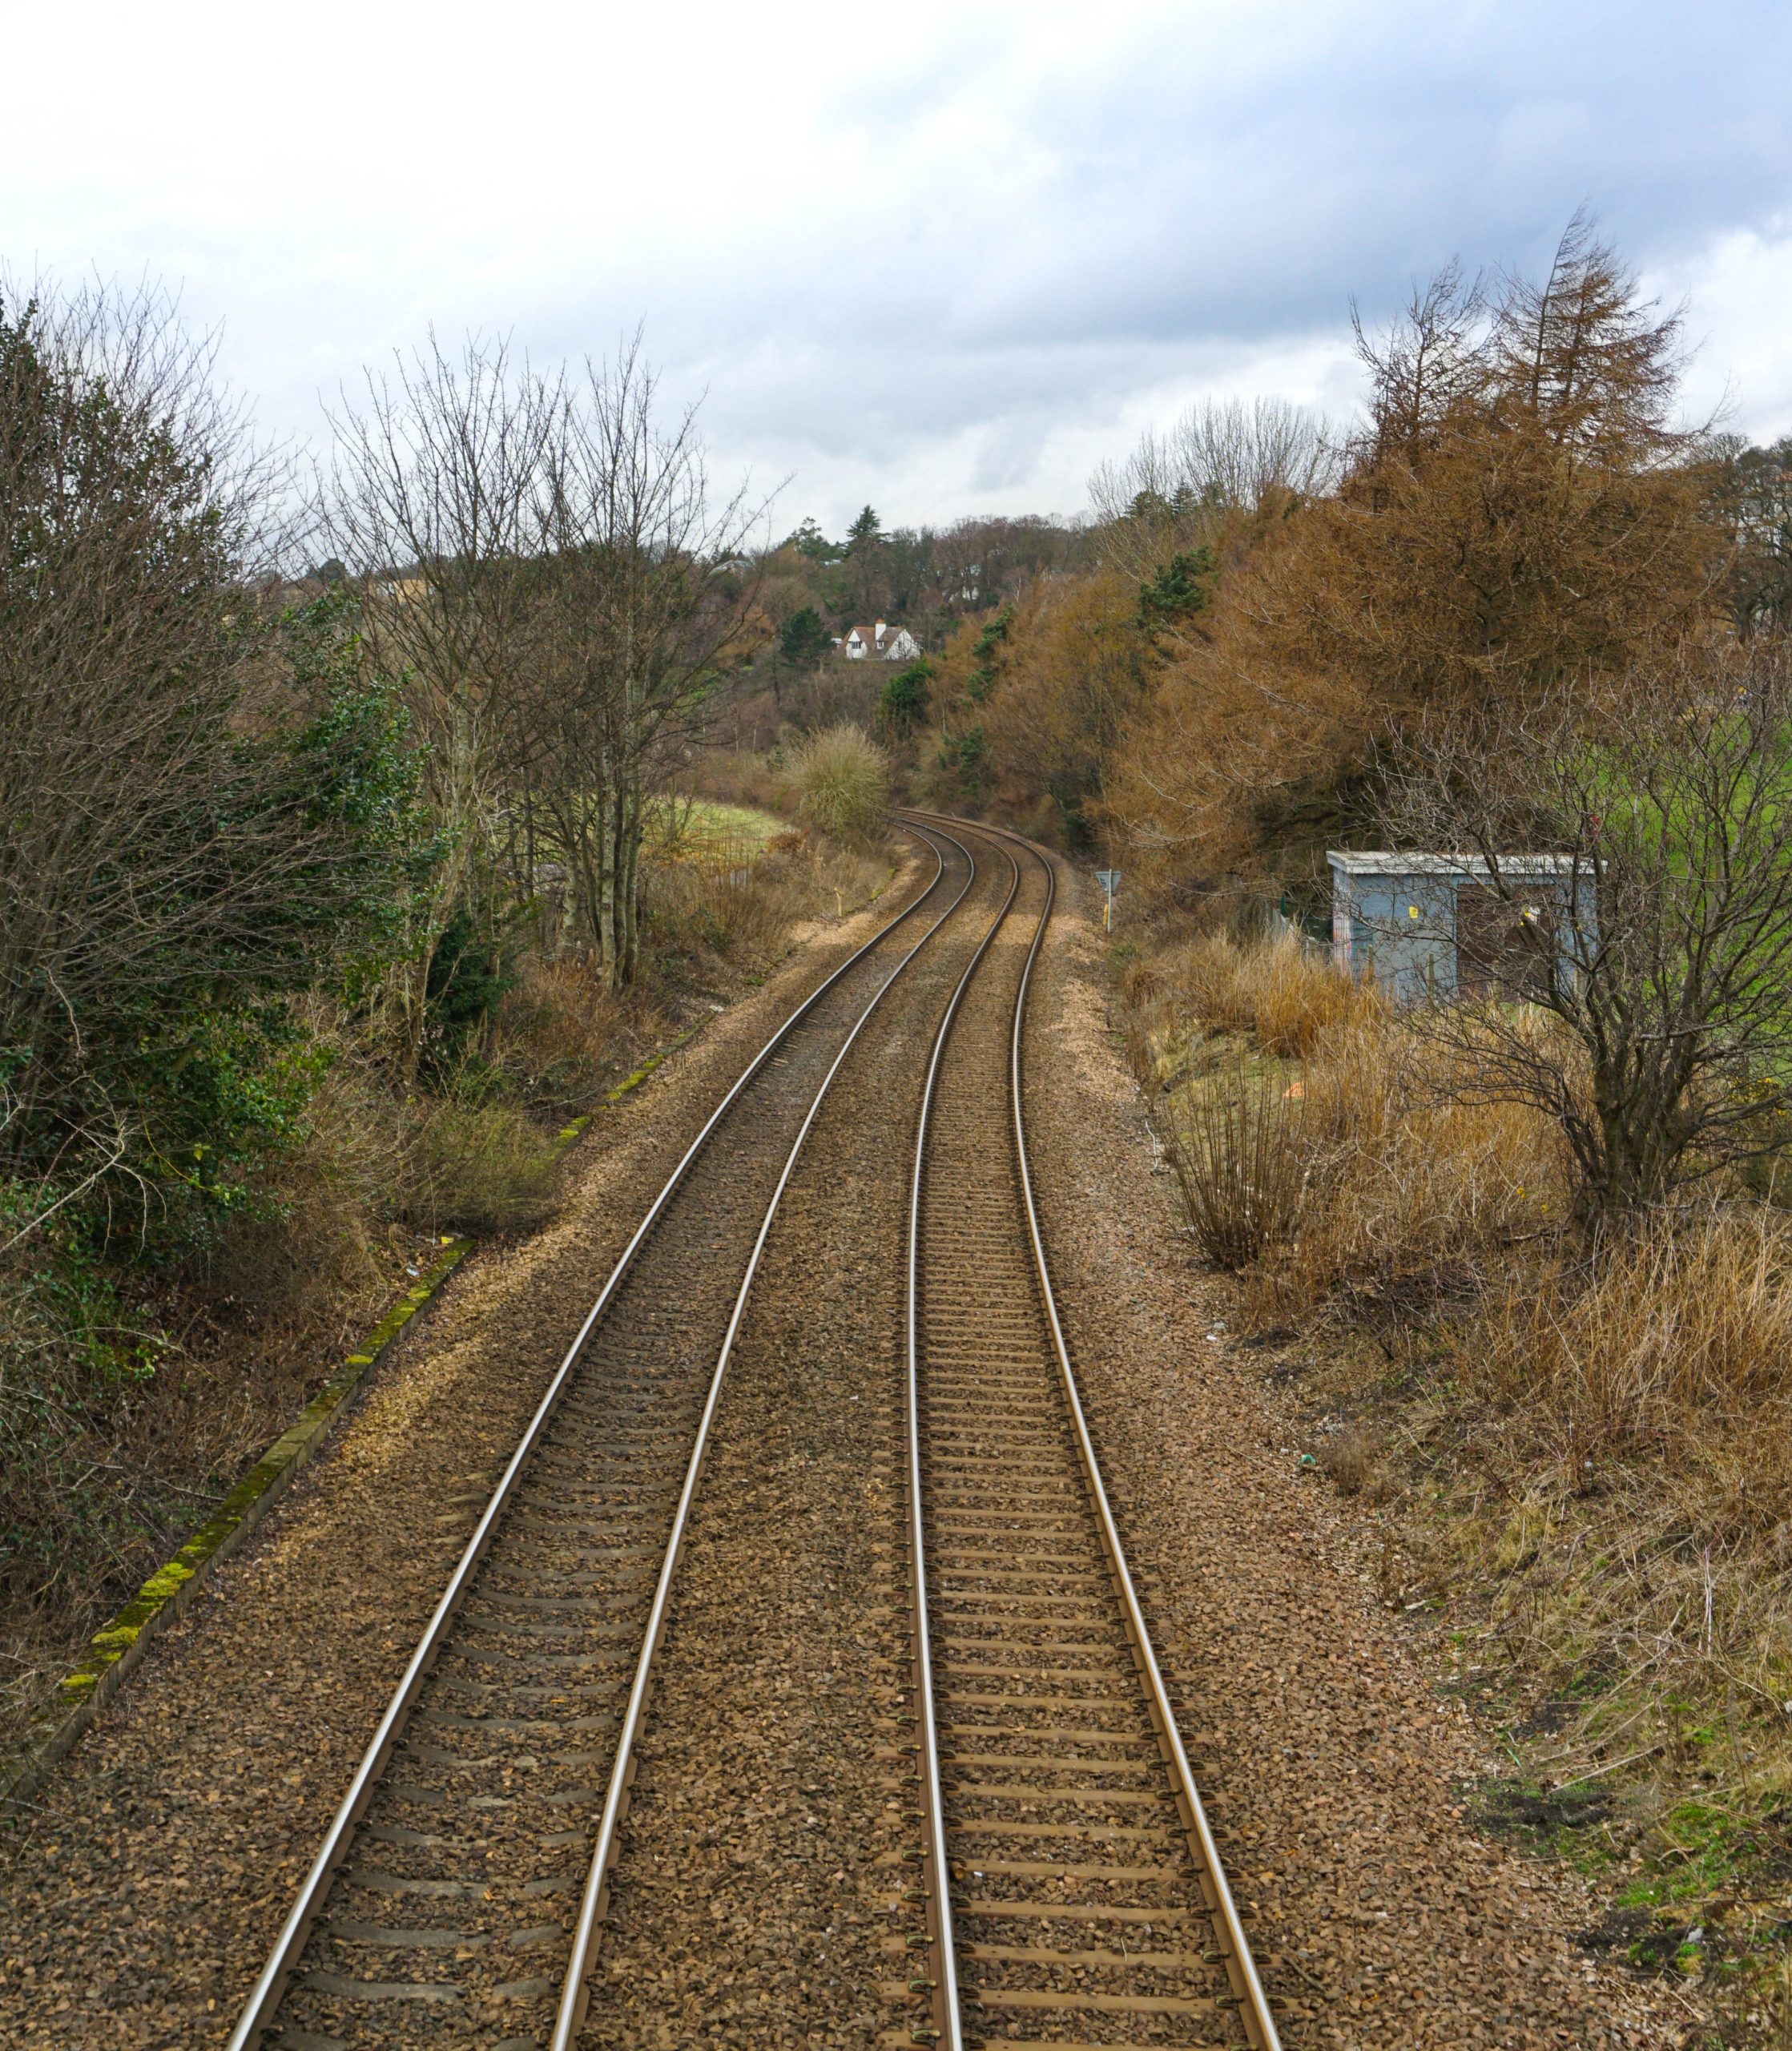 View of railway tracks